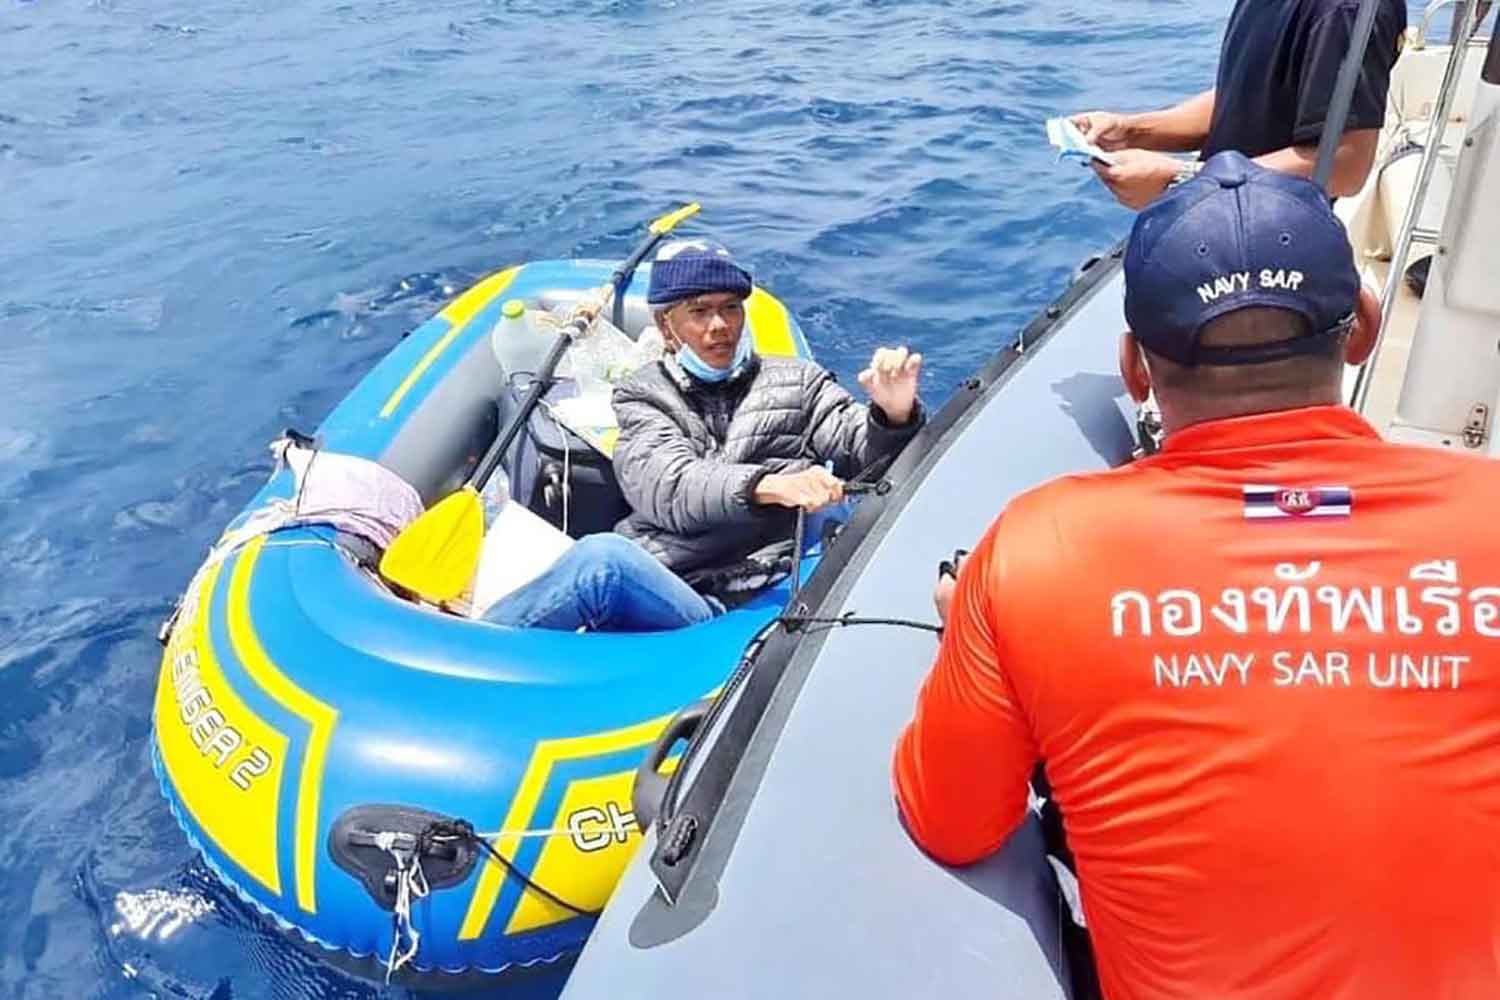 Vietnamese man found paddling inflatable boat toward India to see wife: Bangkok Post